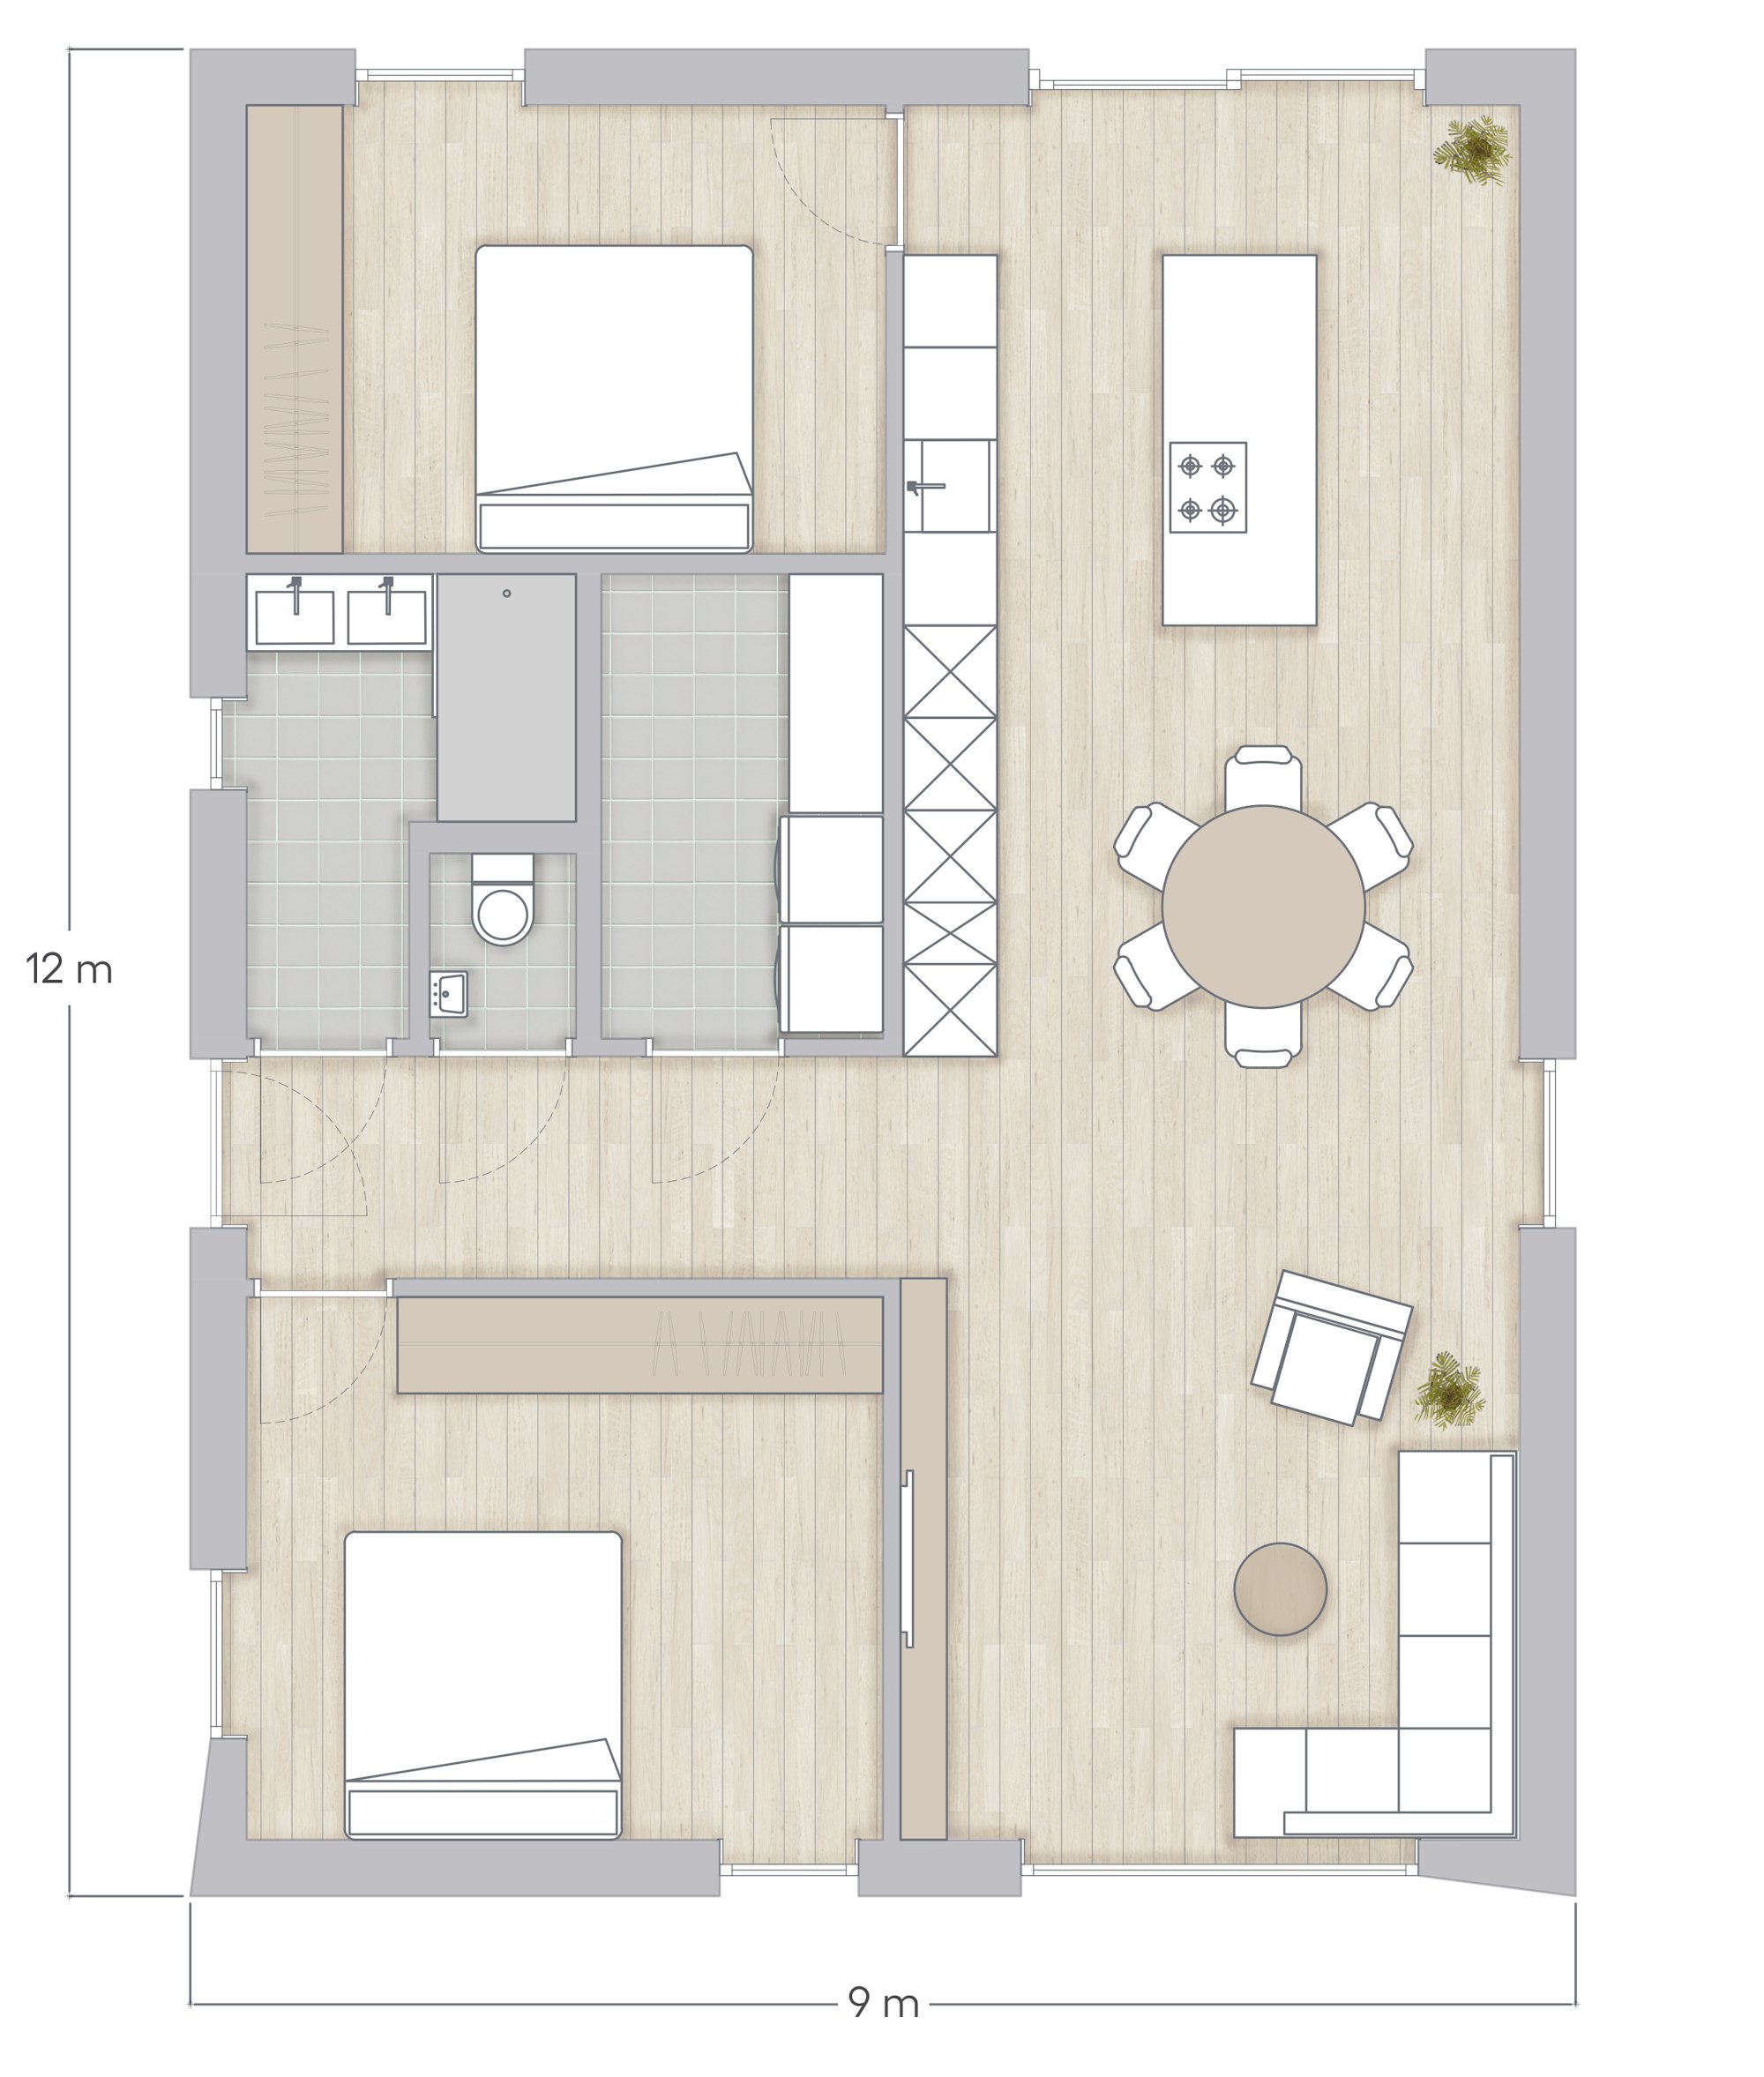 Plan Skilpod #108, 2 slaapkamers gelijkvloers bungalow woning